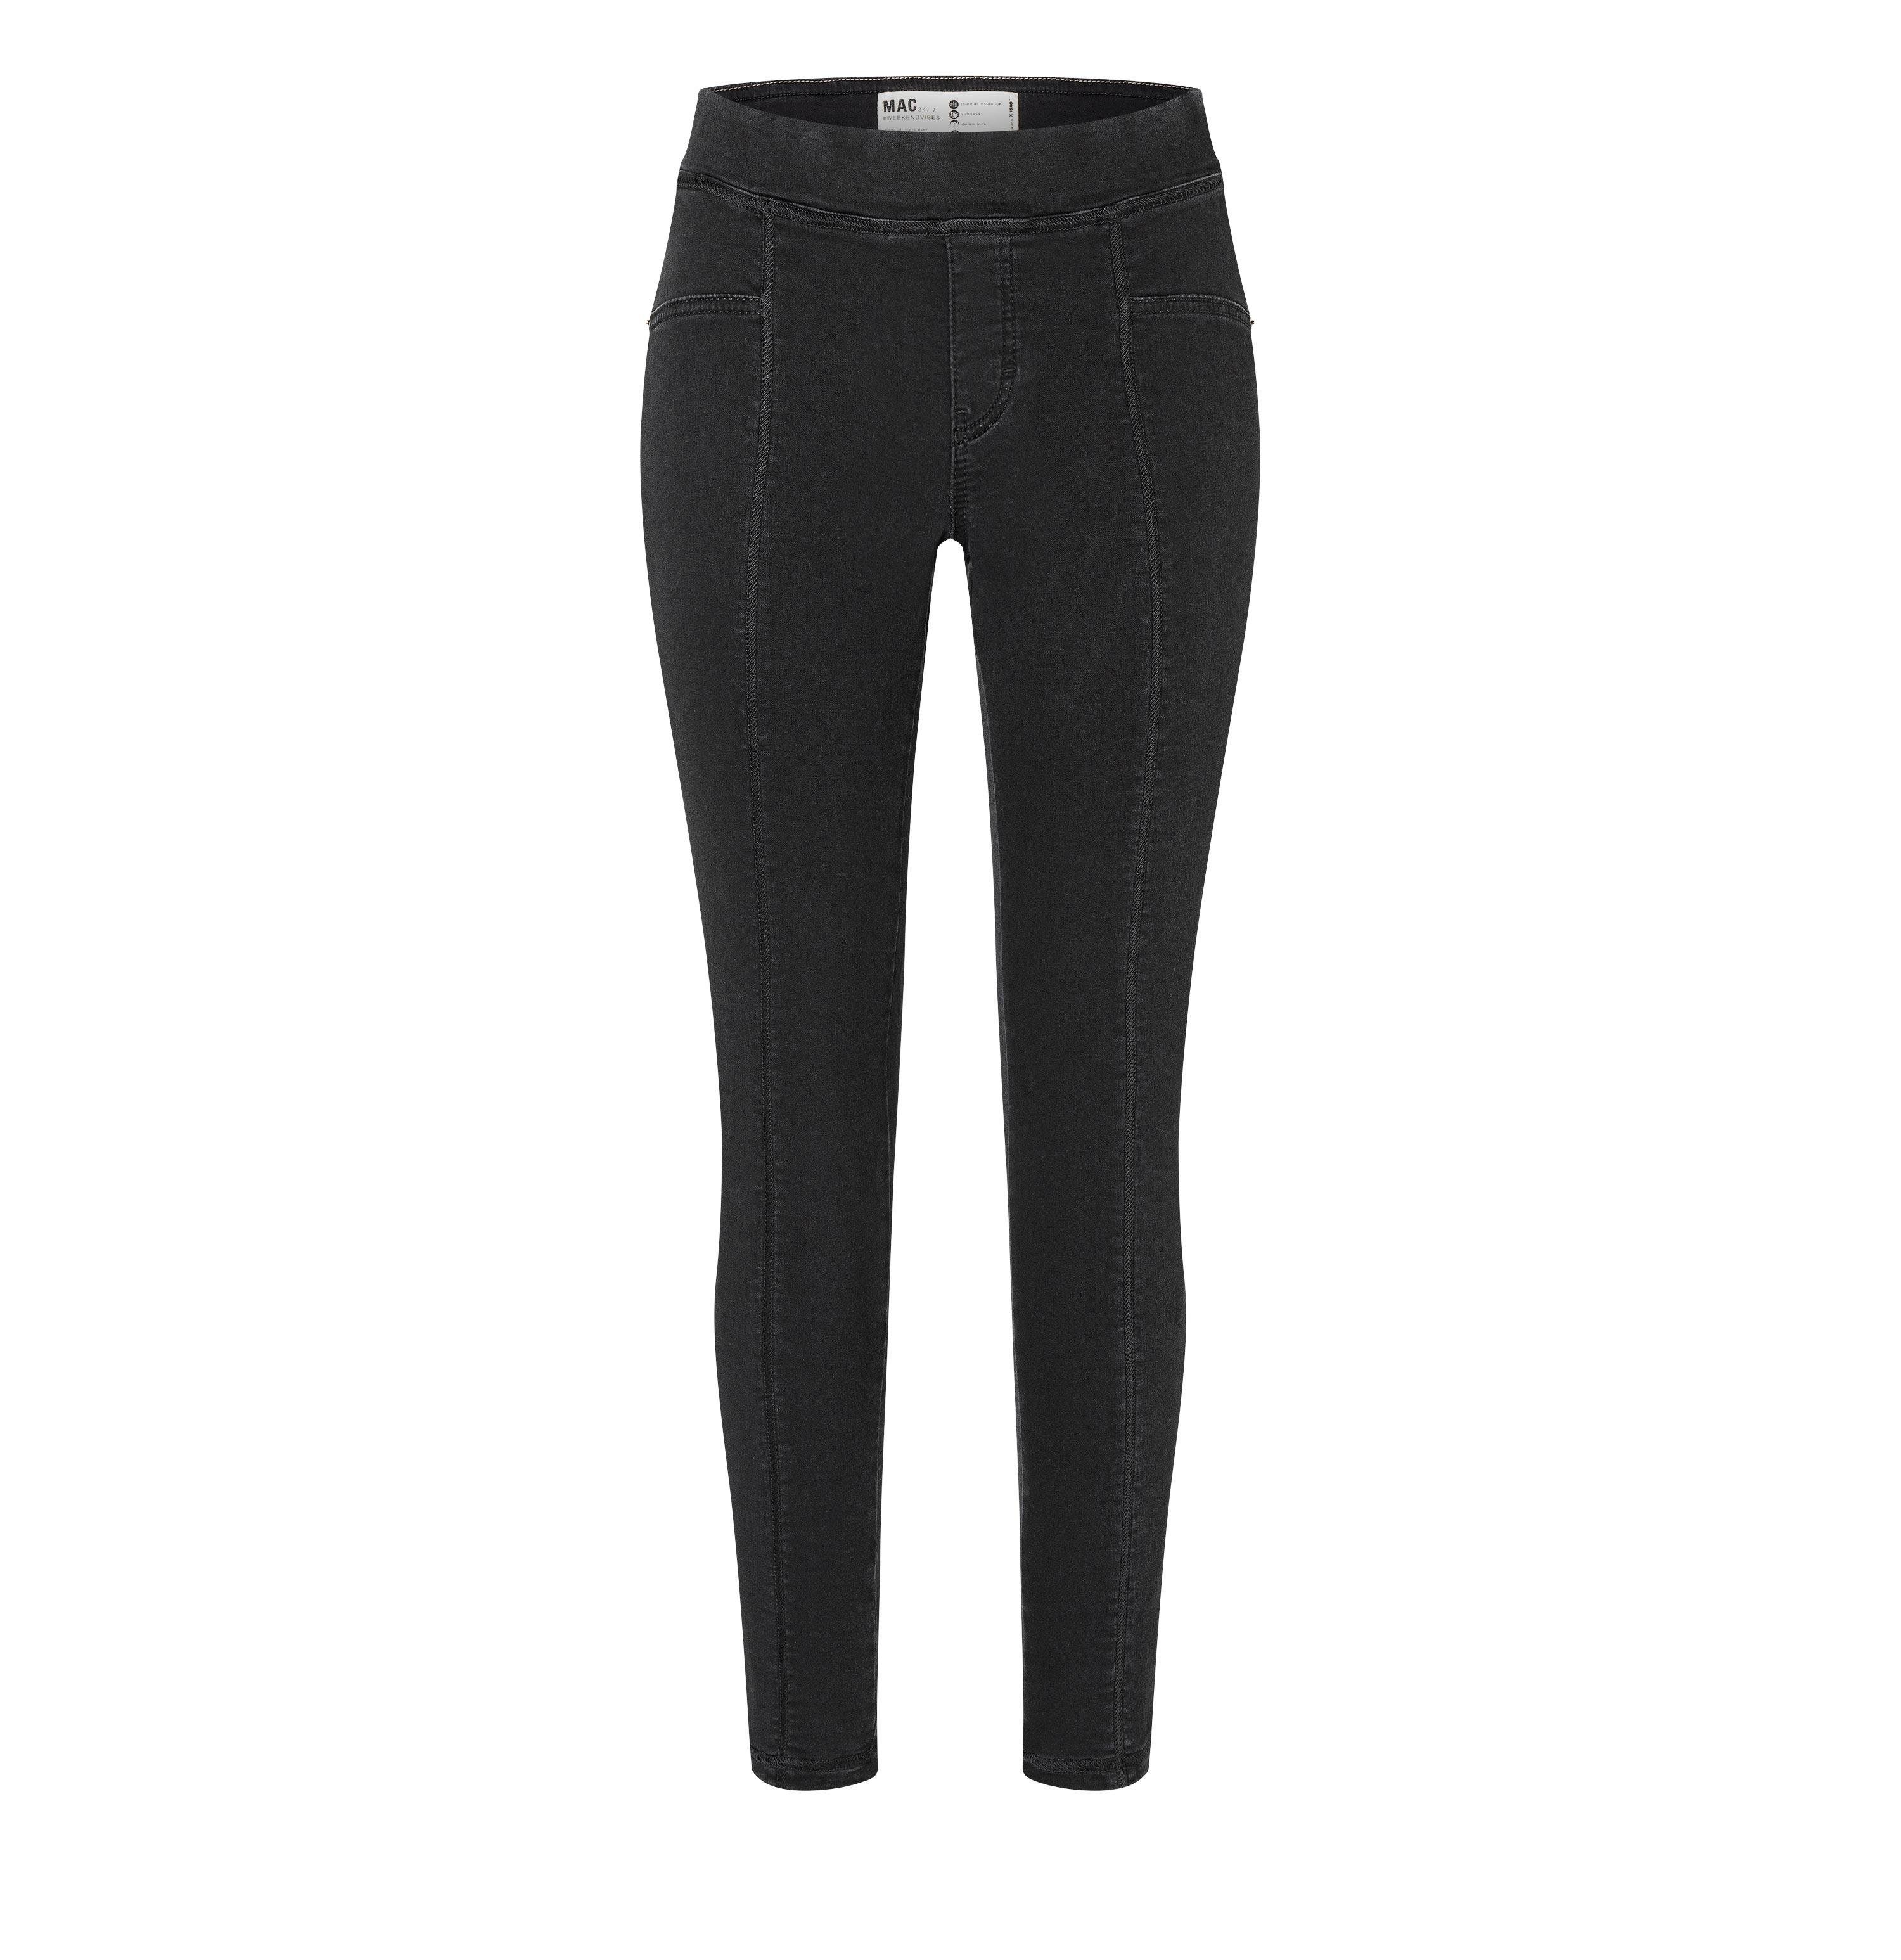 MAC Stretch-Jeans MAC LEGGINGS cosy black rinsewash 5907-90-0350 D991 - ISKO™ SOFT DENIM schwarz